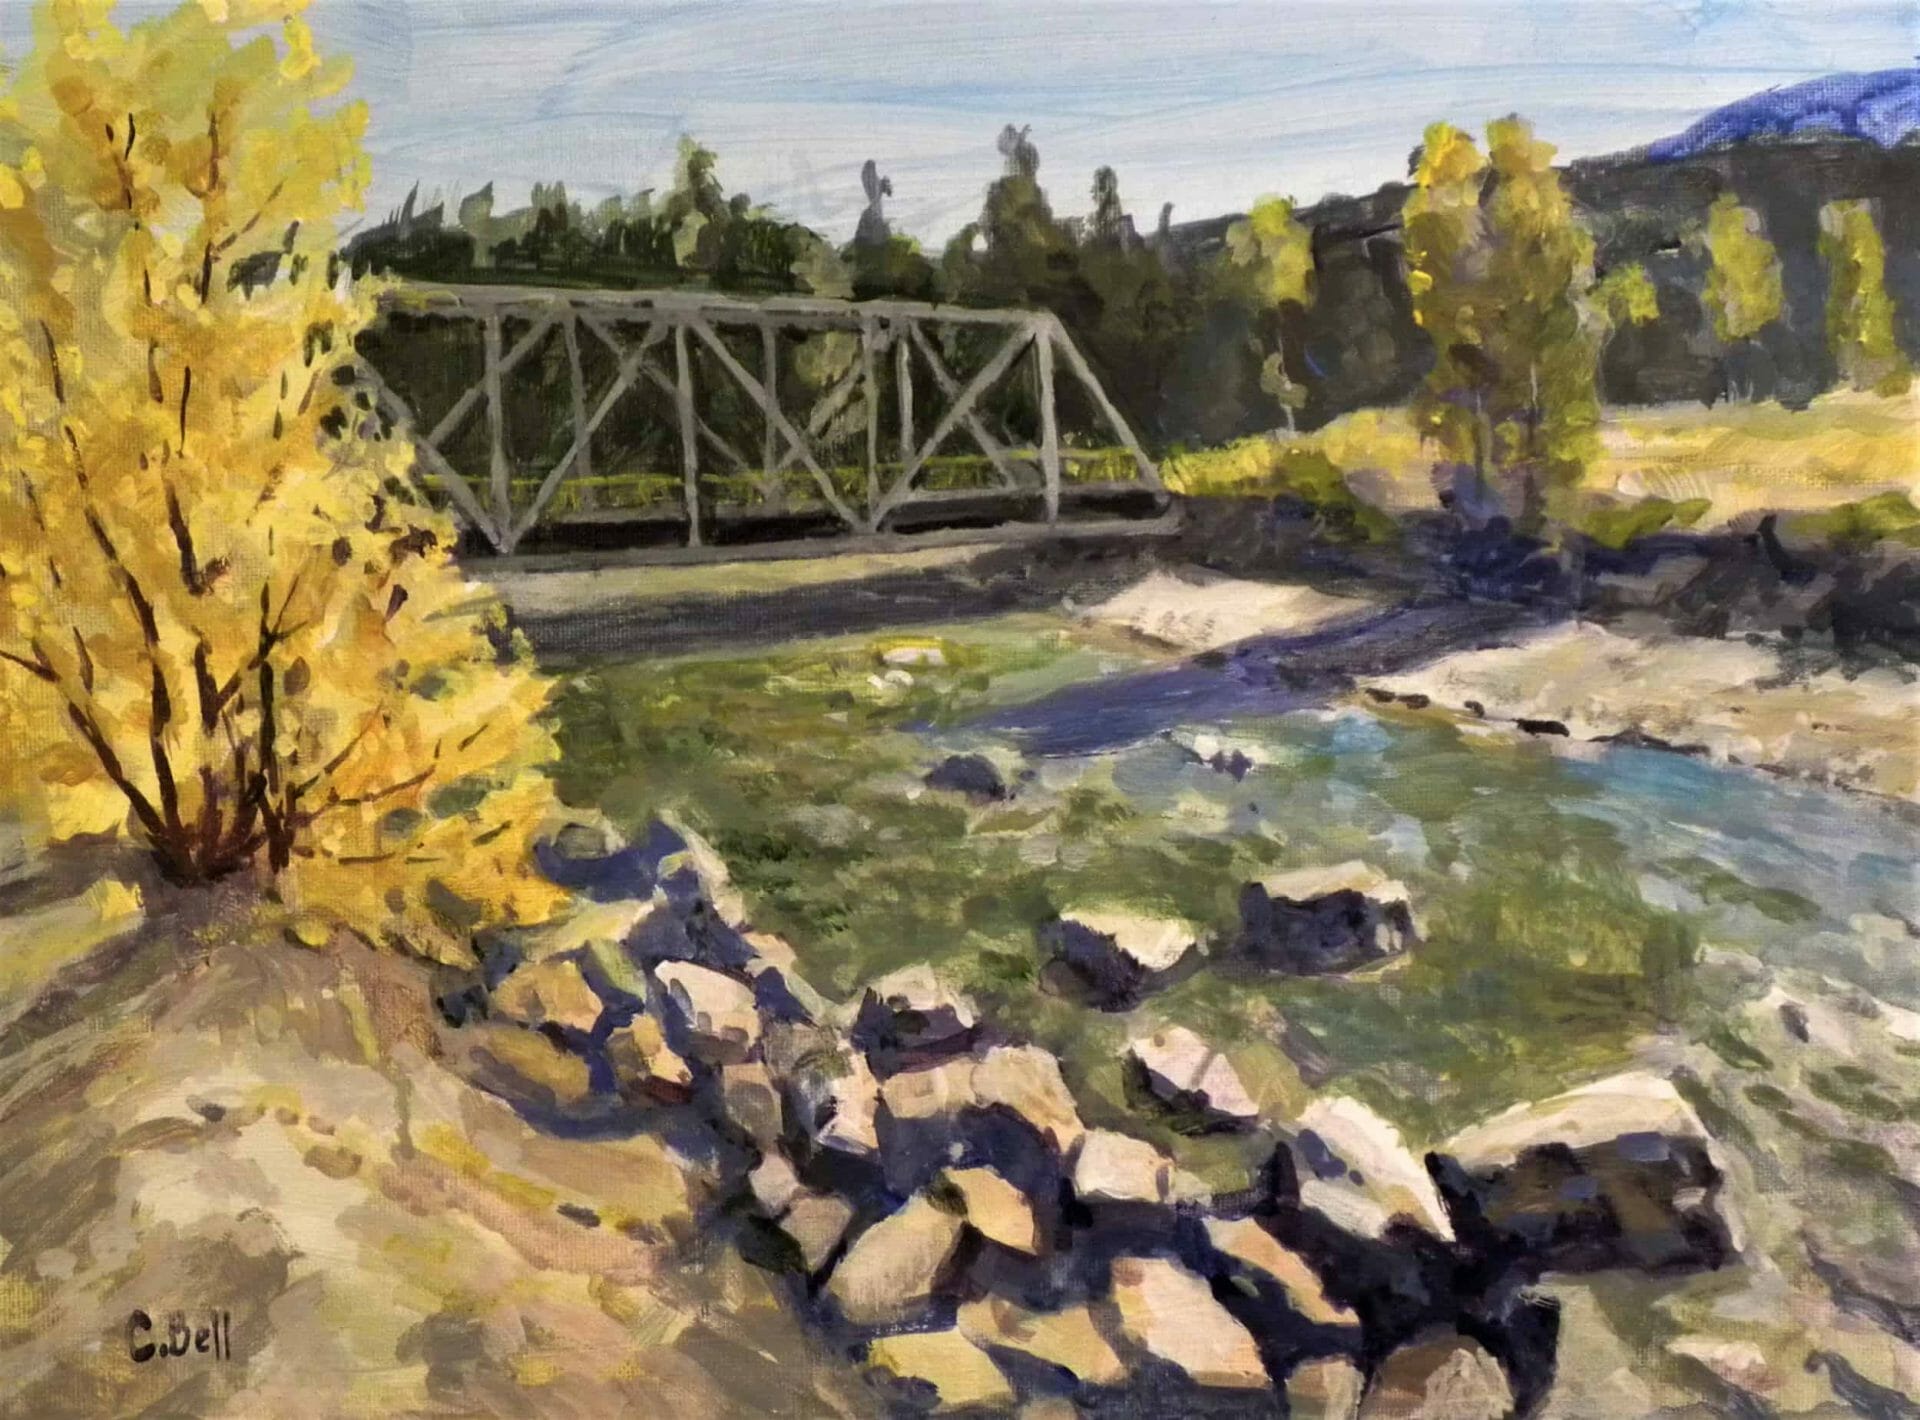 Dutch Creek Bridge [1125] - Canadian Original Artwork For Sale by Colin Bell - Calgary, AB Local Artist - Architectural